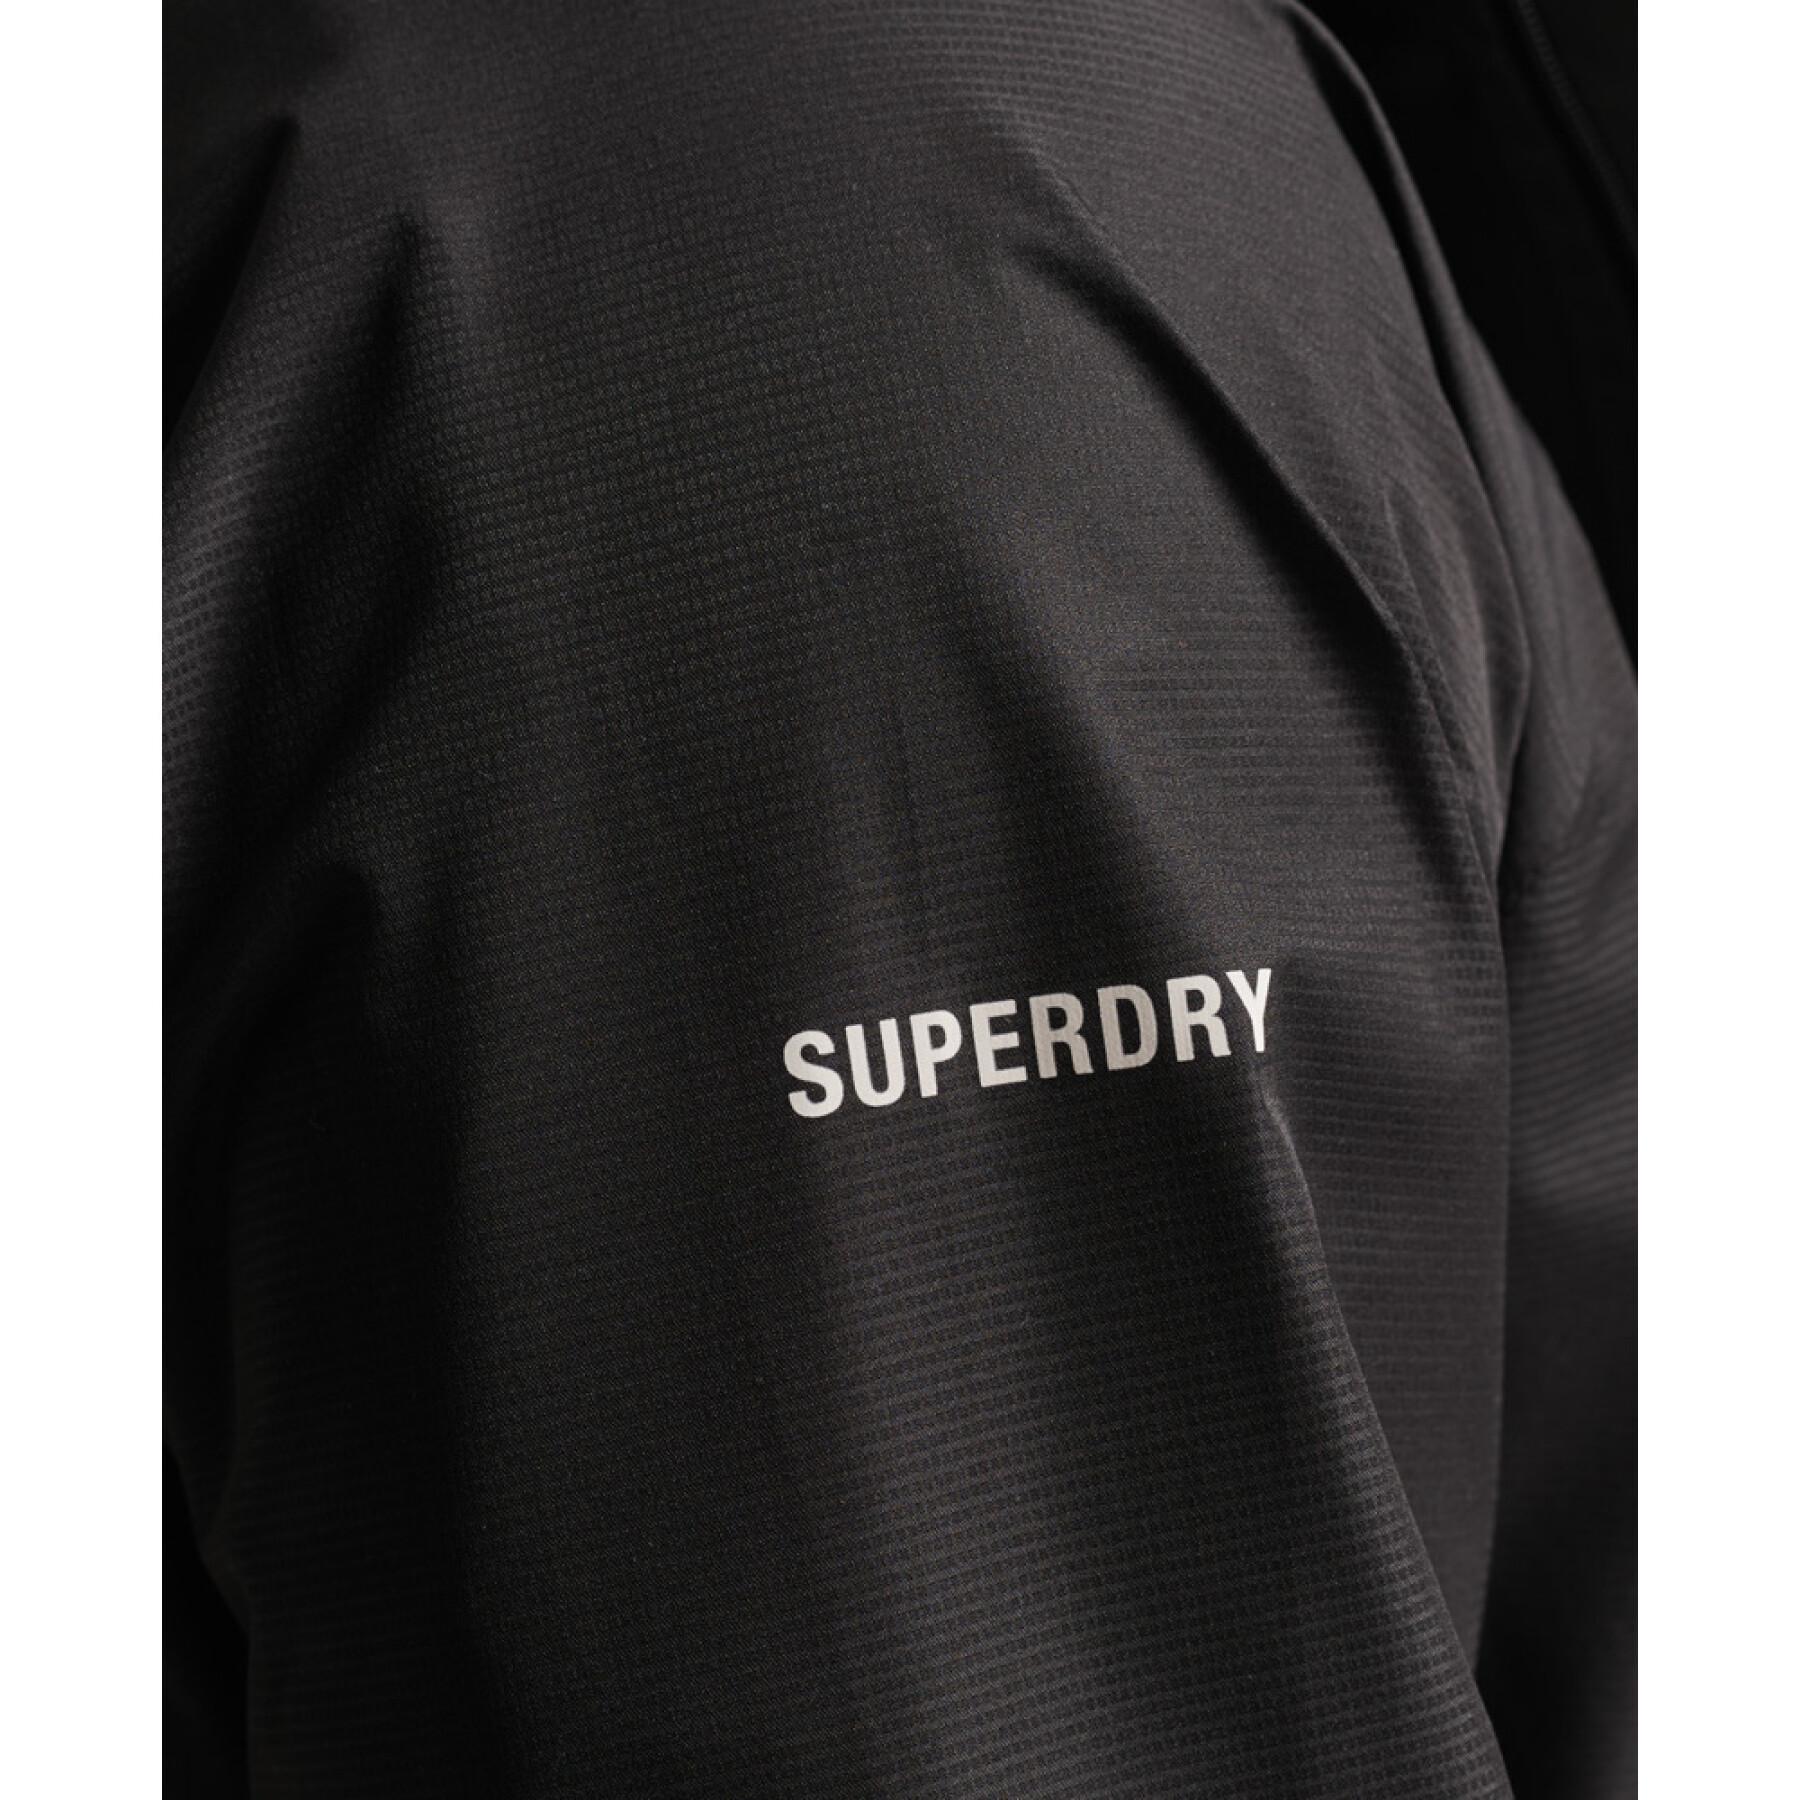 Camisa impermeável Superdry